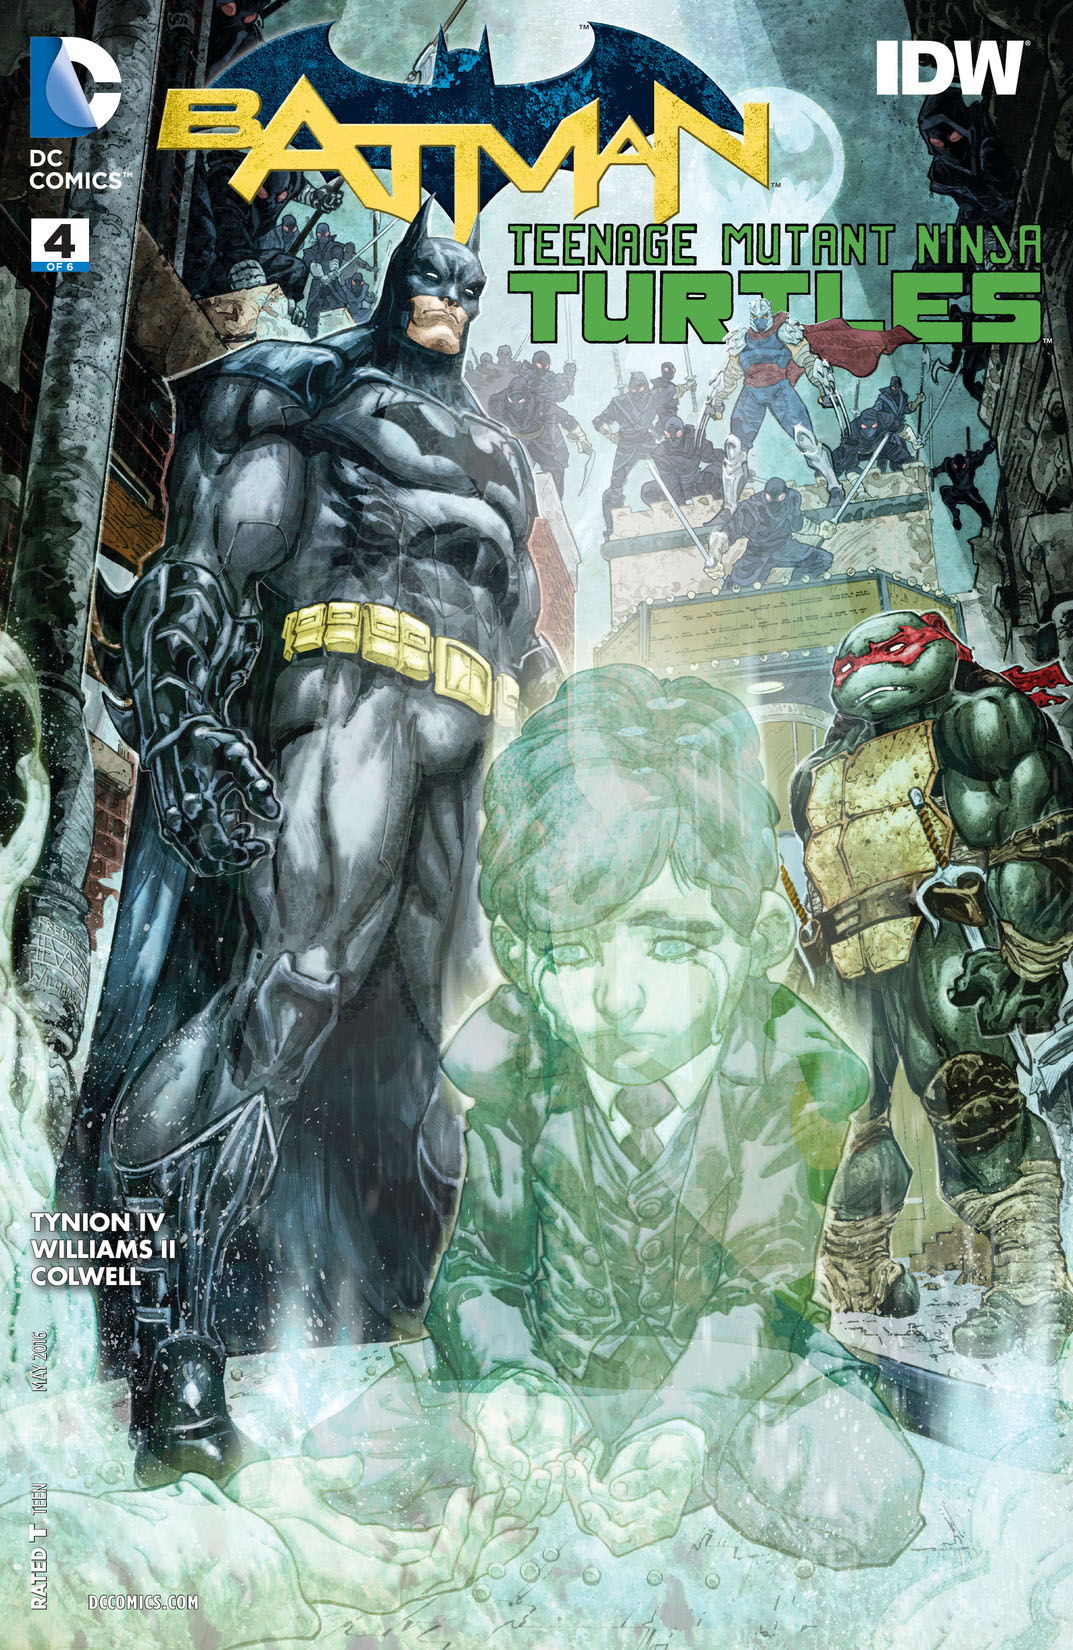 Batman/Teenage Mutant Ninja Turtles #4 preview images